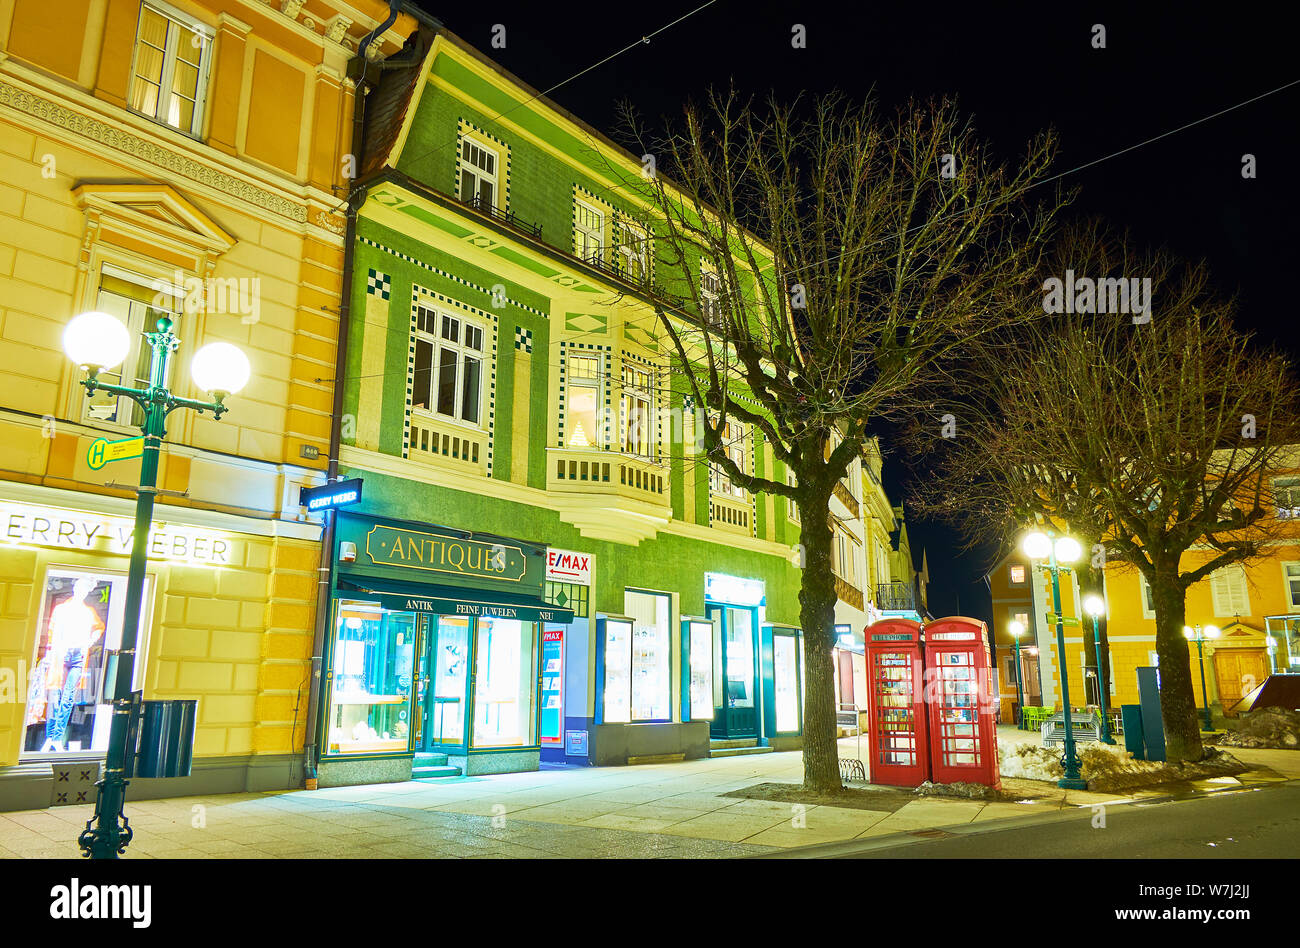 BAD ISCHL, AUSTRIA - FEBRUARY 26, 2019: The scenic illuminated townhouses in Kreuzplatz square with stores, restaurants, art galleries and antique sho Stock Photo